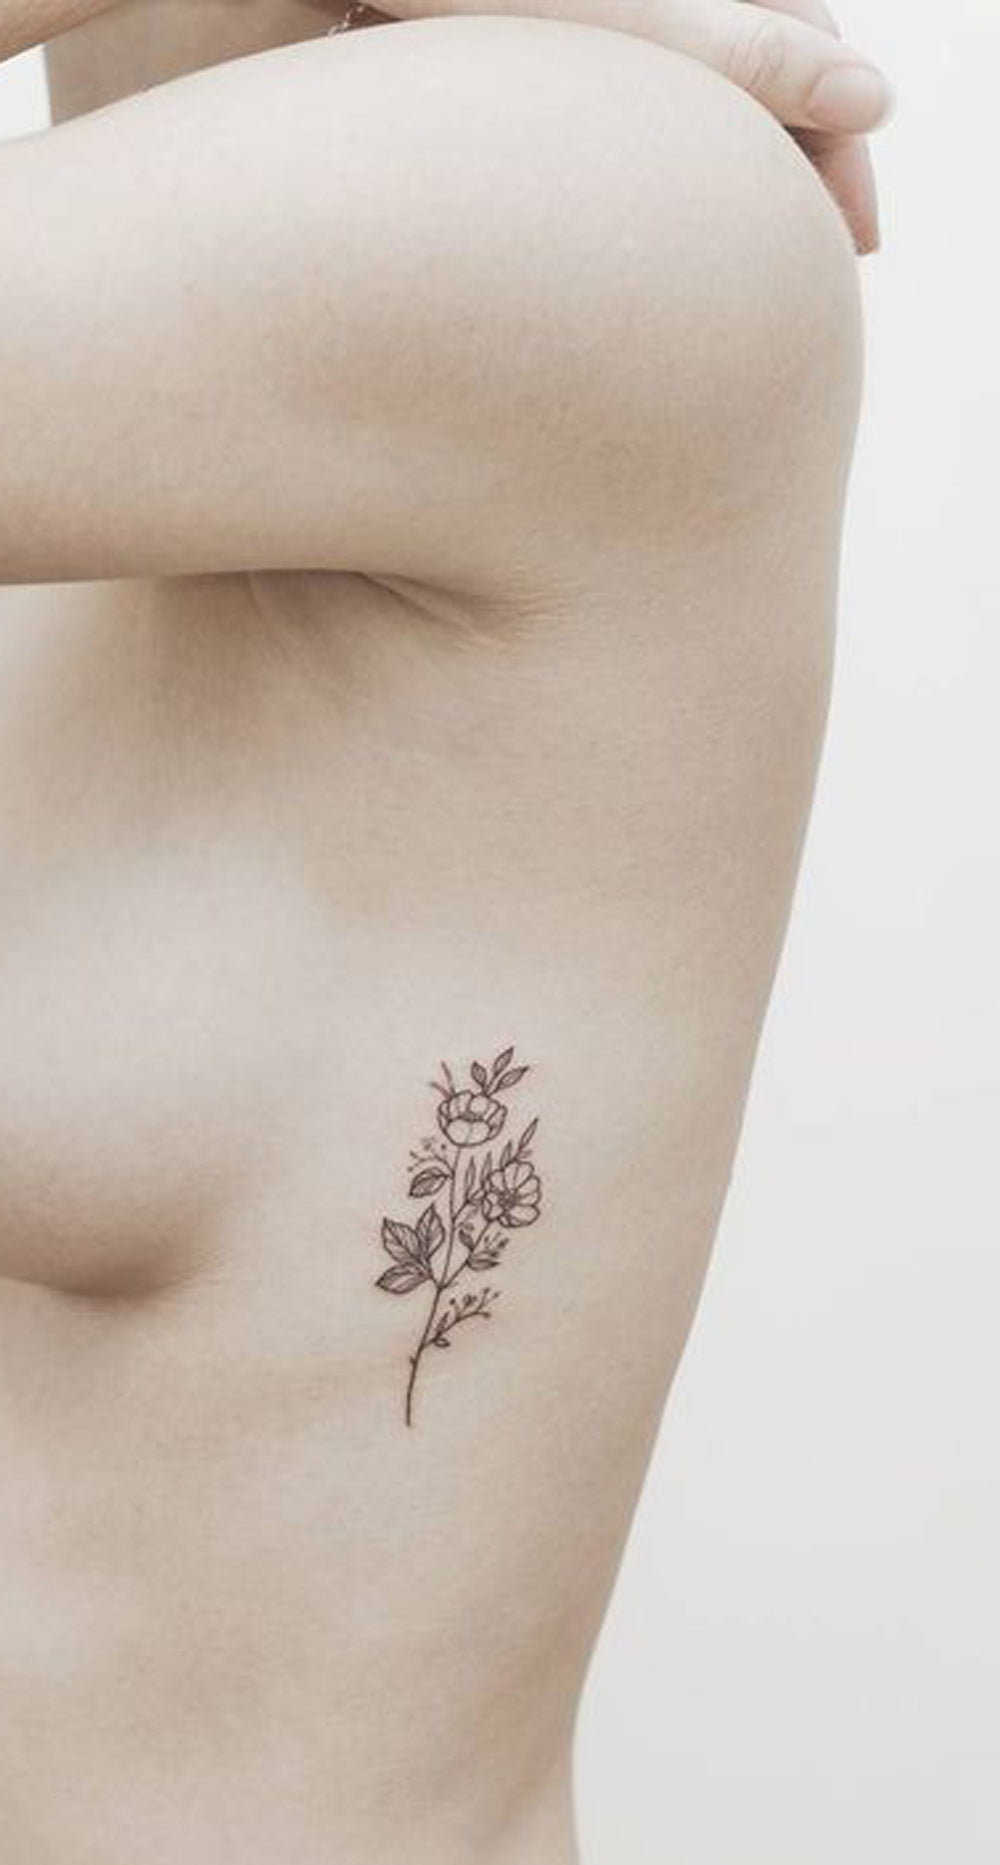 Small Minimal Simple Wild Flower Rib Tattoo Ideas for Women - Tiny Floral Flower Side Body Tatt-  Pequeñas ideas simples simples del tatuaje de la costilla de la flor salvaje para las mujeres - www.MyBodiArt.com